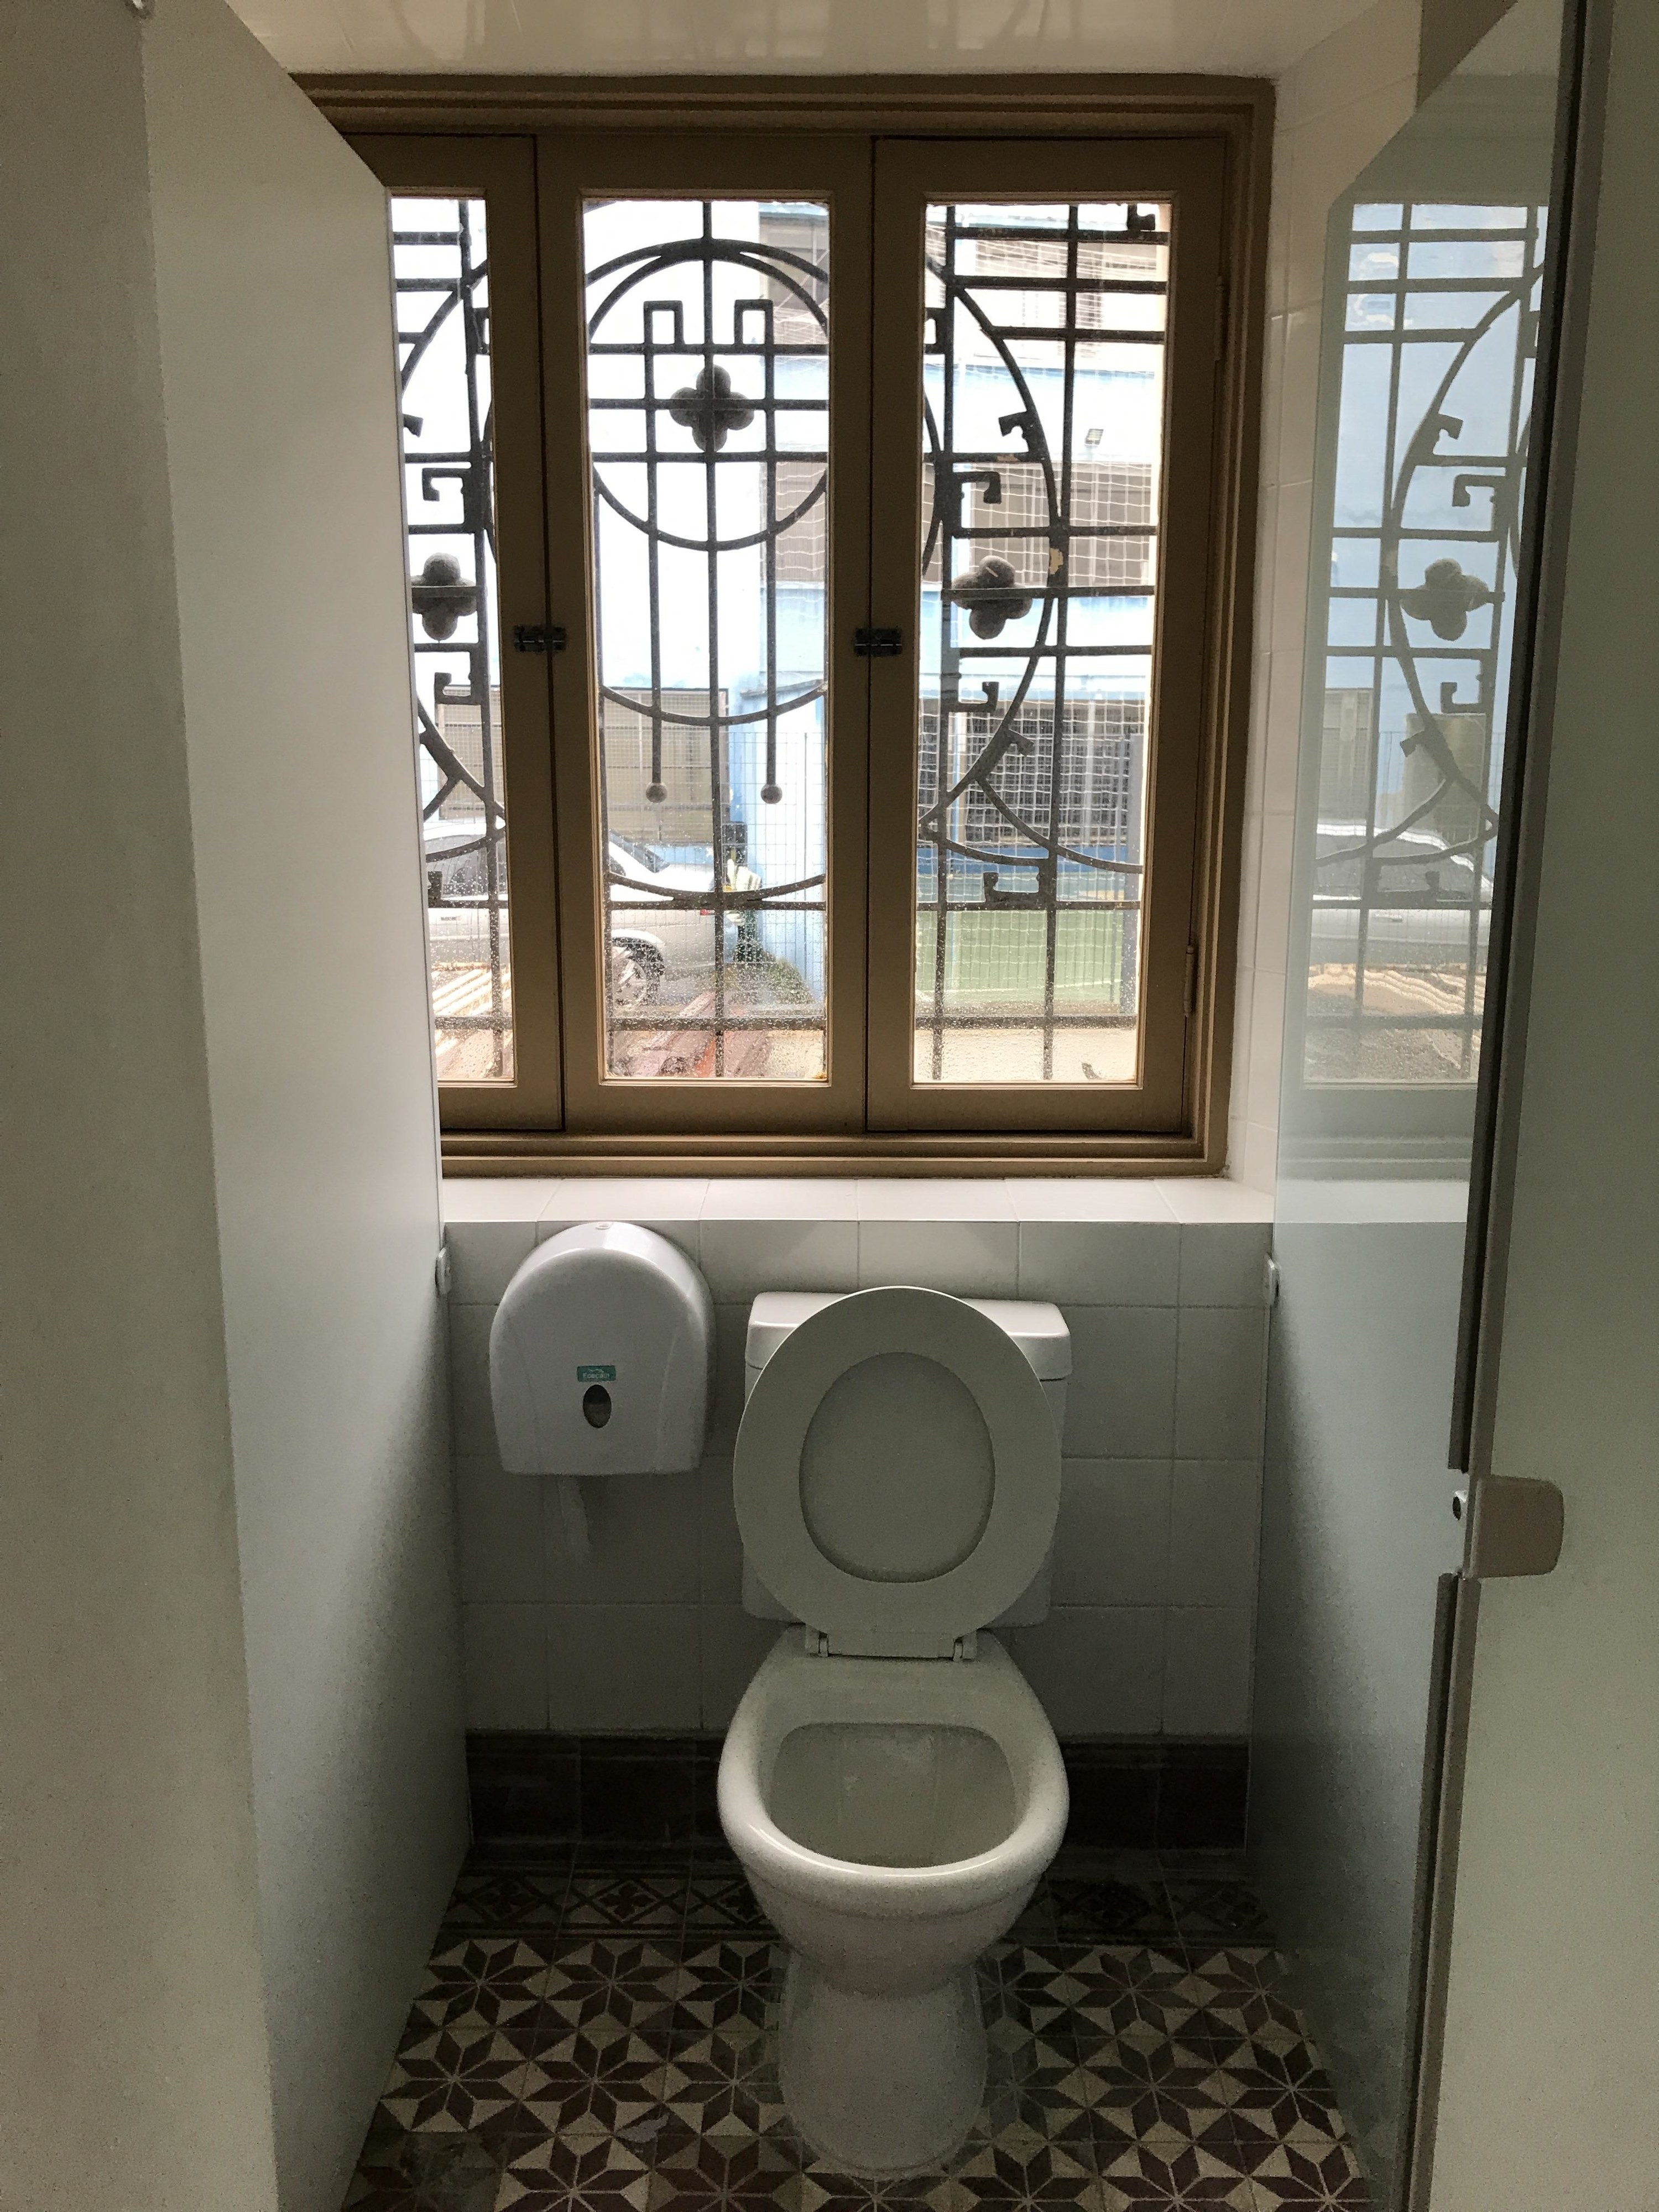 a toilet next to a window